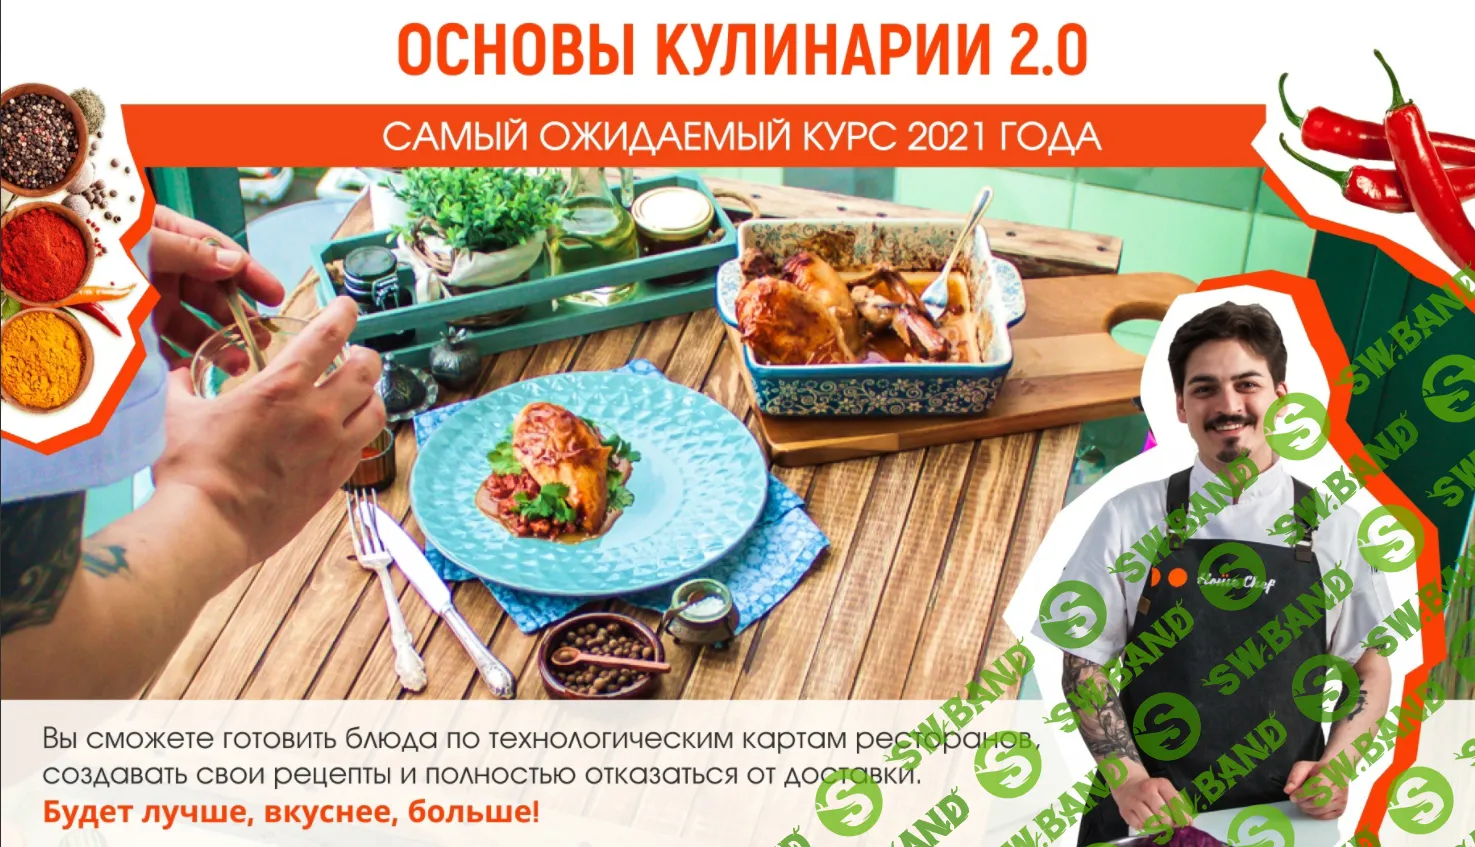 [Home chef] Основы кулинарии 2.0 (2021)